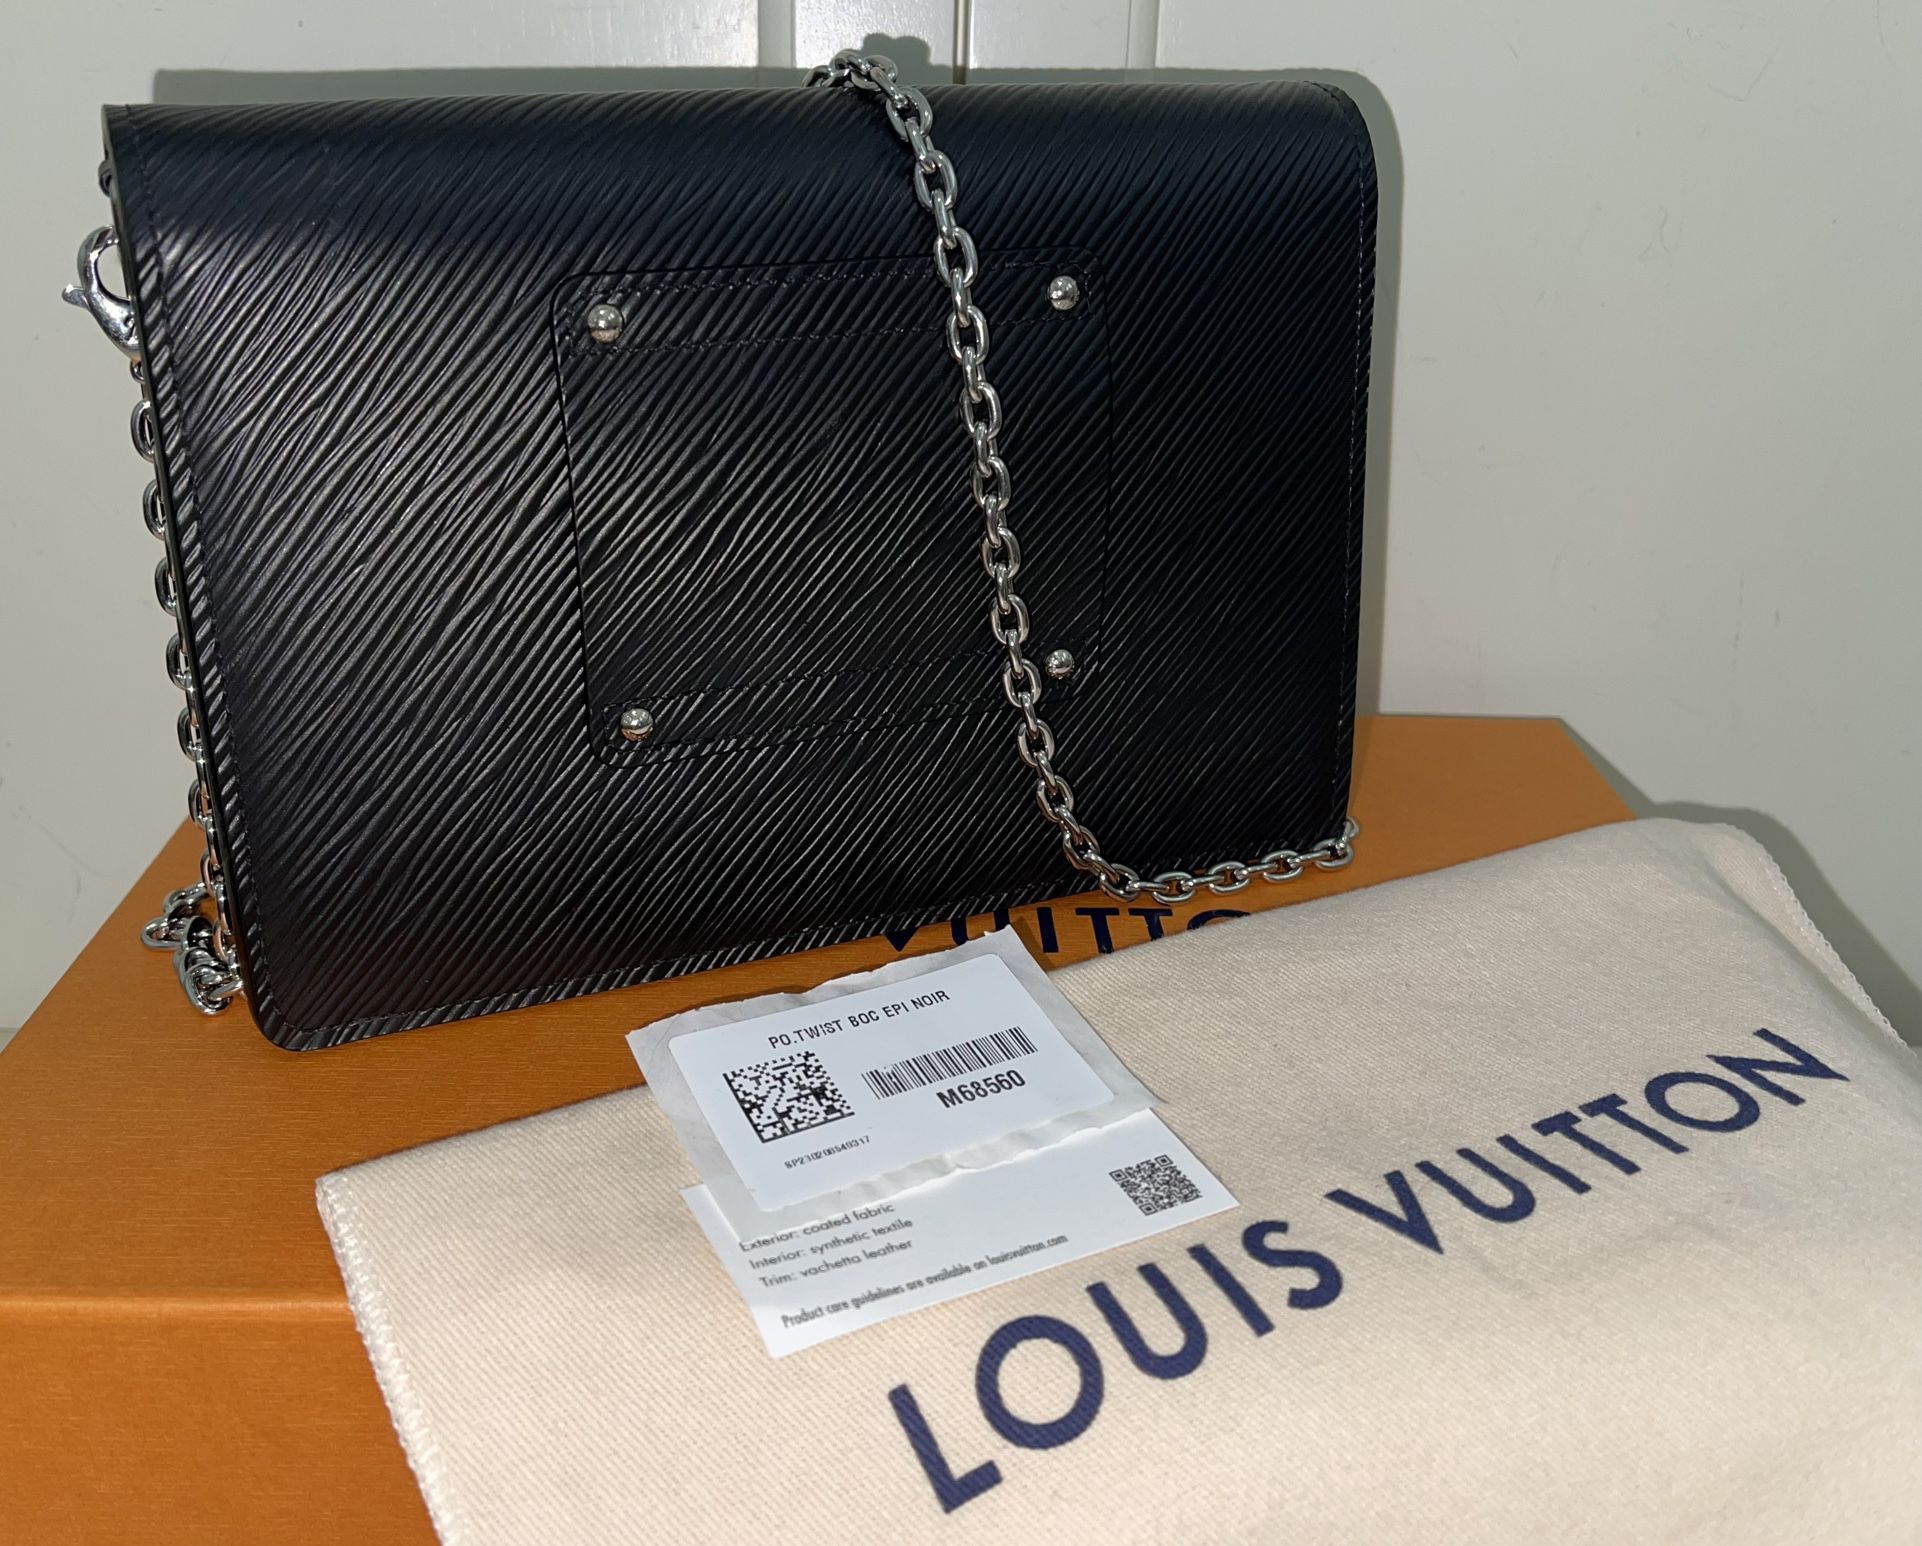 Louis Vuitton Twist Belt Chain Wallet Epi Black Silver M68560